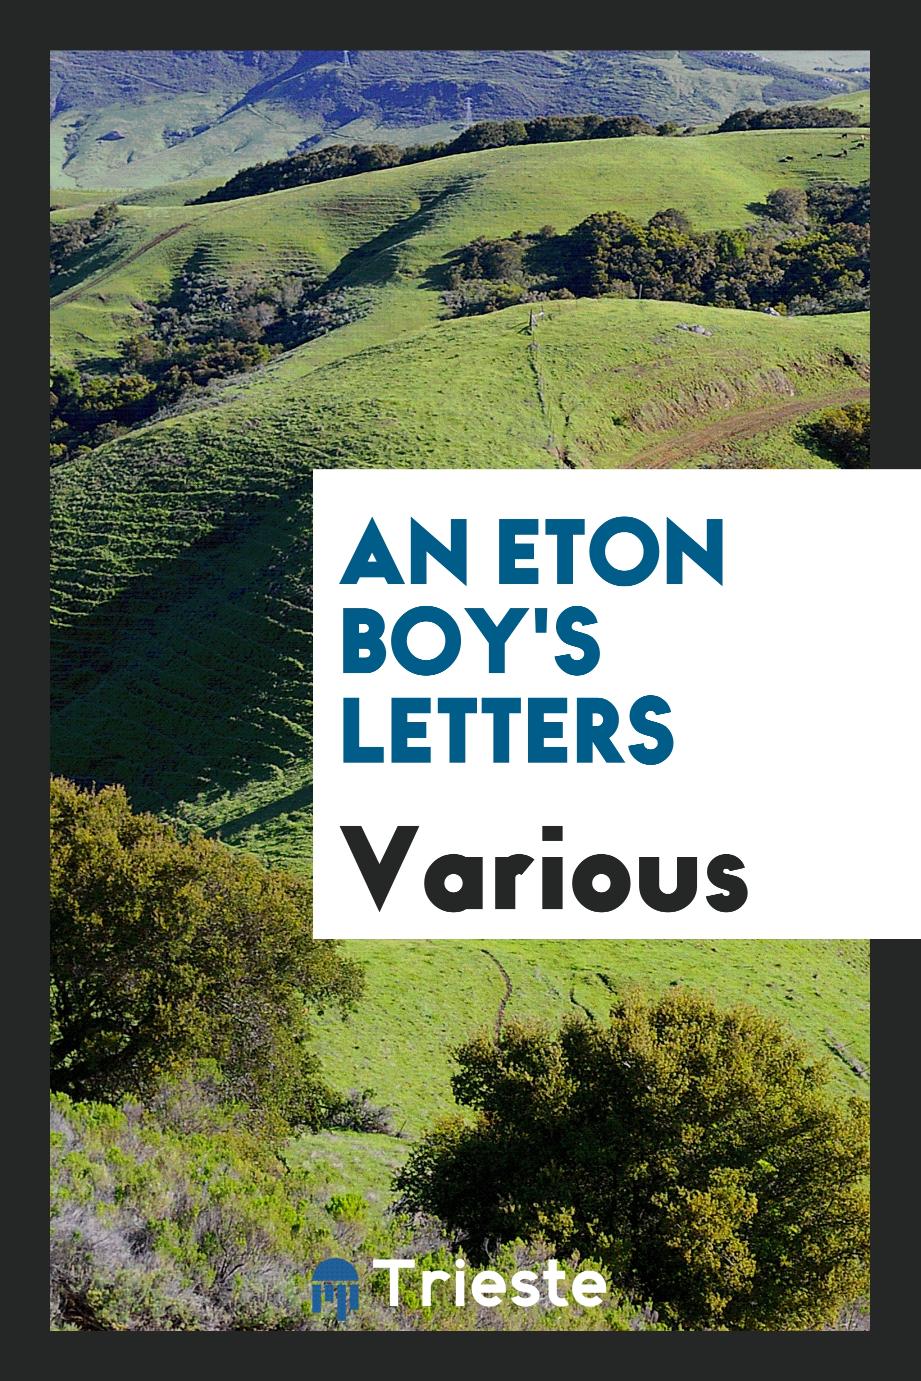 An Eton boy's letters